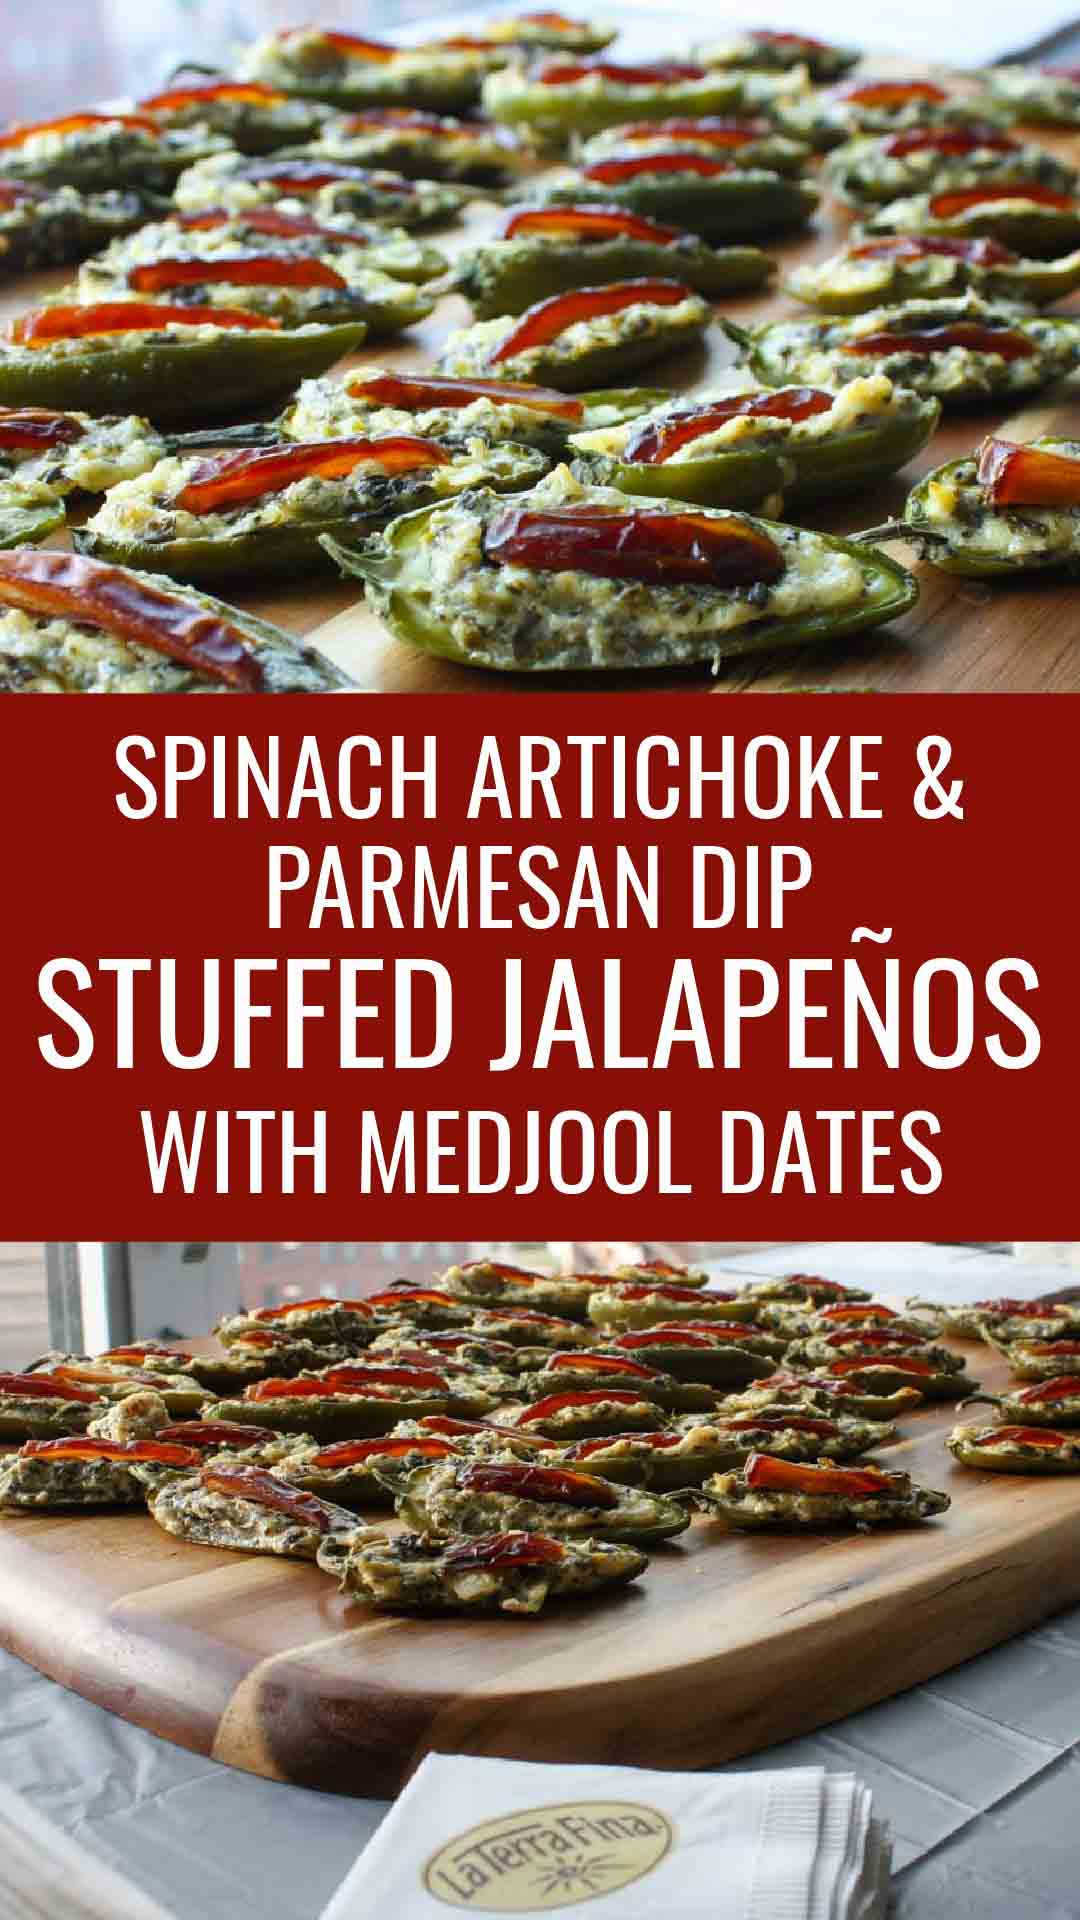 Spinach Artichoke & Parmesan Dip-stuffed jalapeño peppers with Medjool dates appetizer